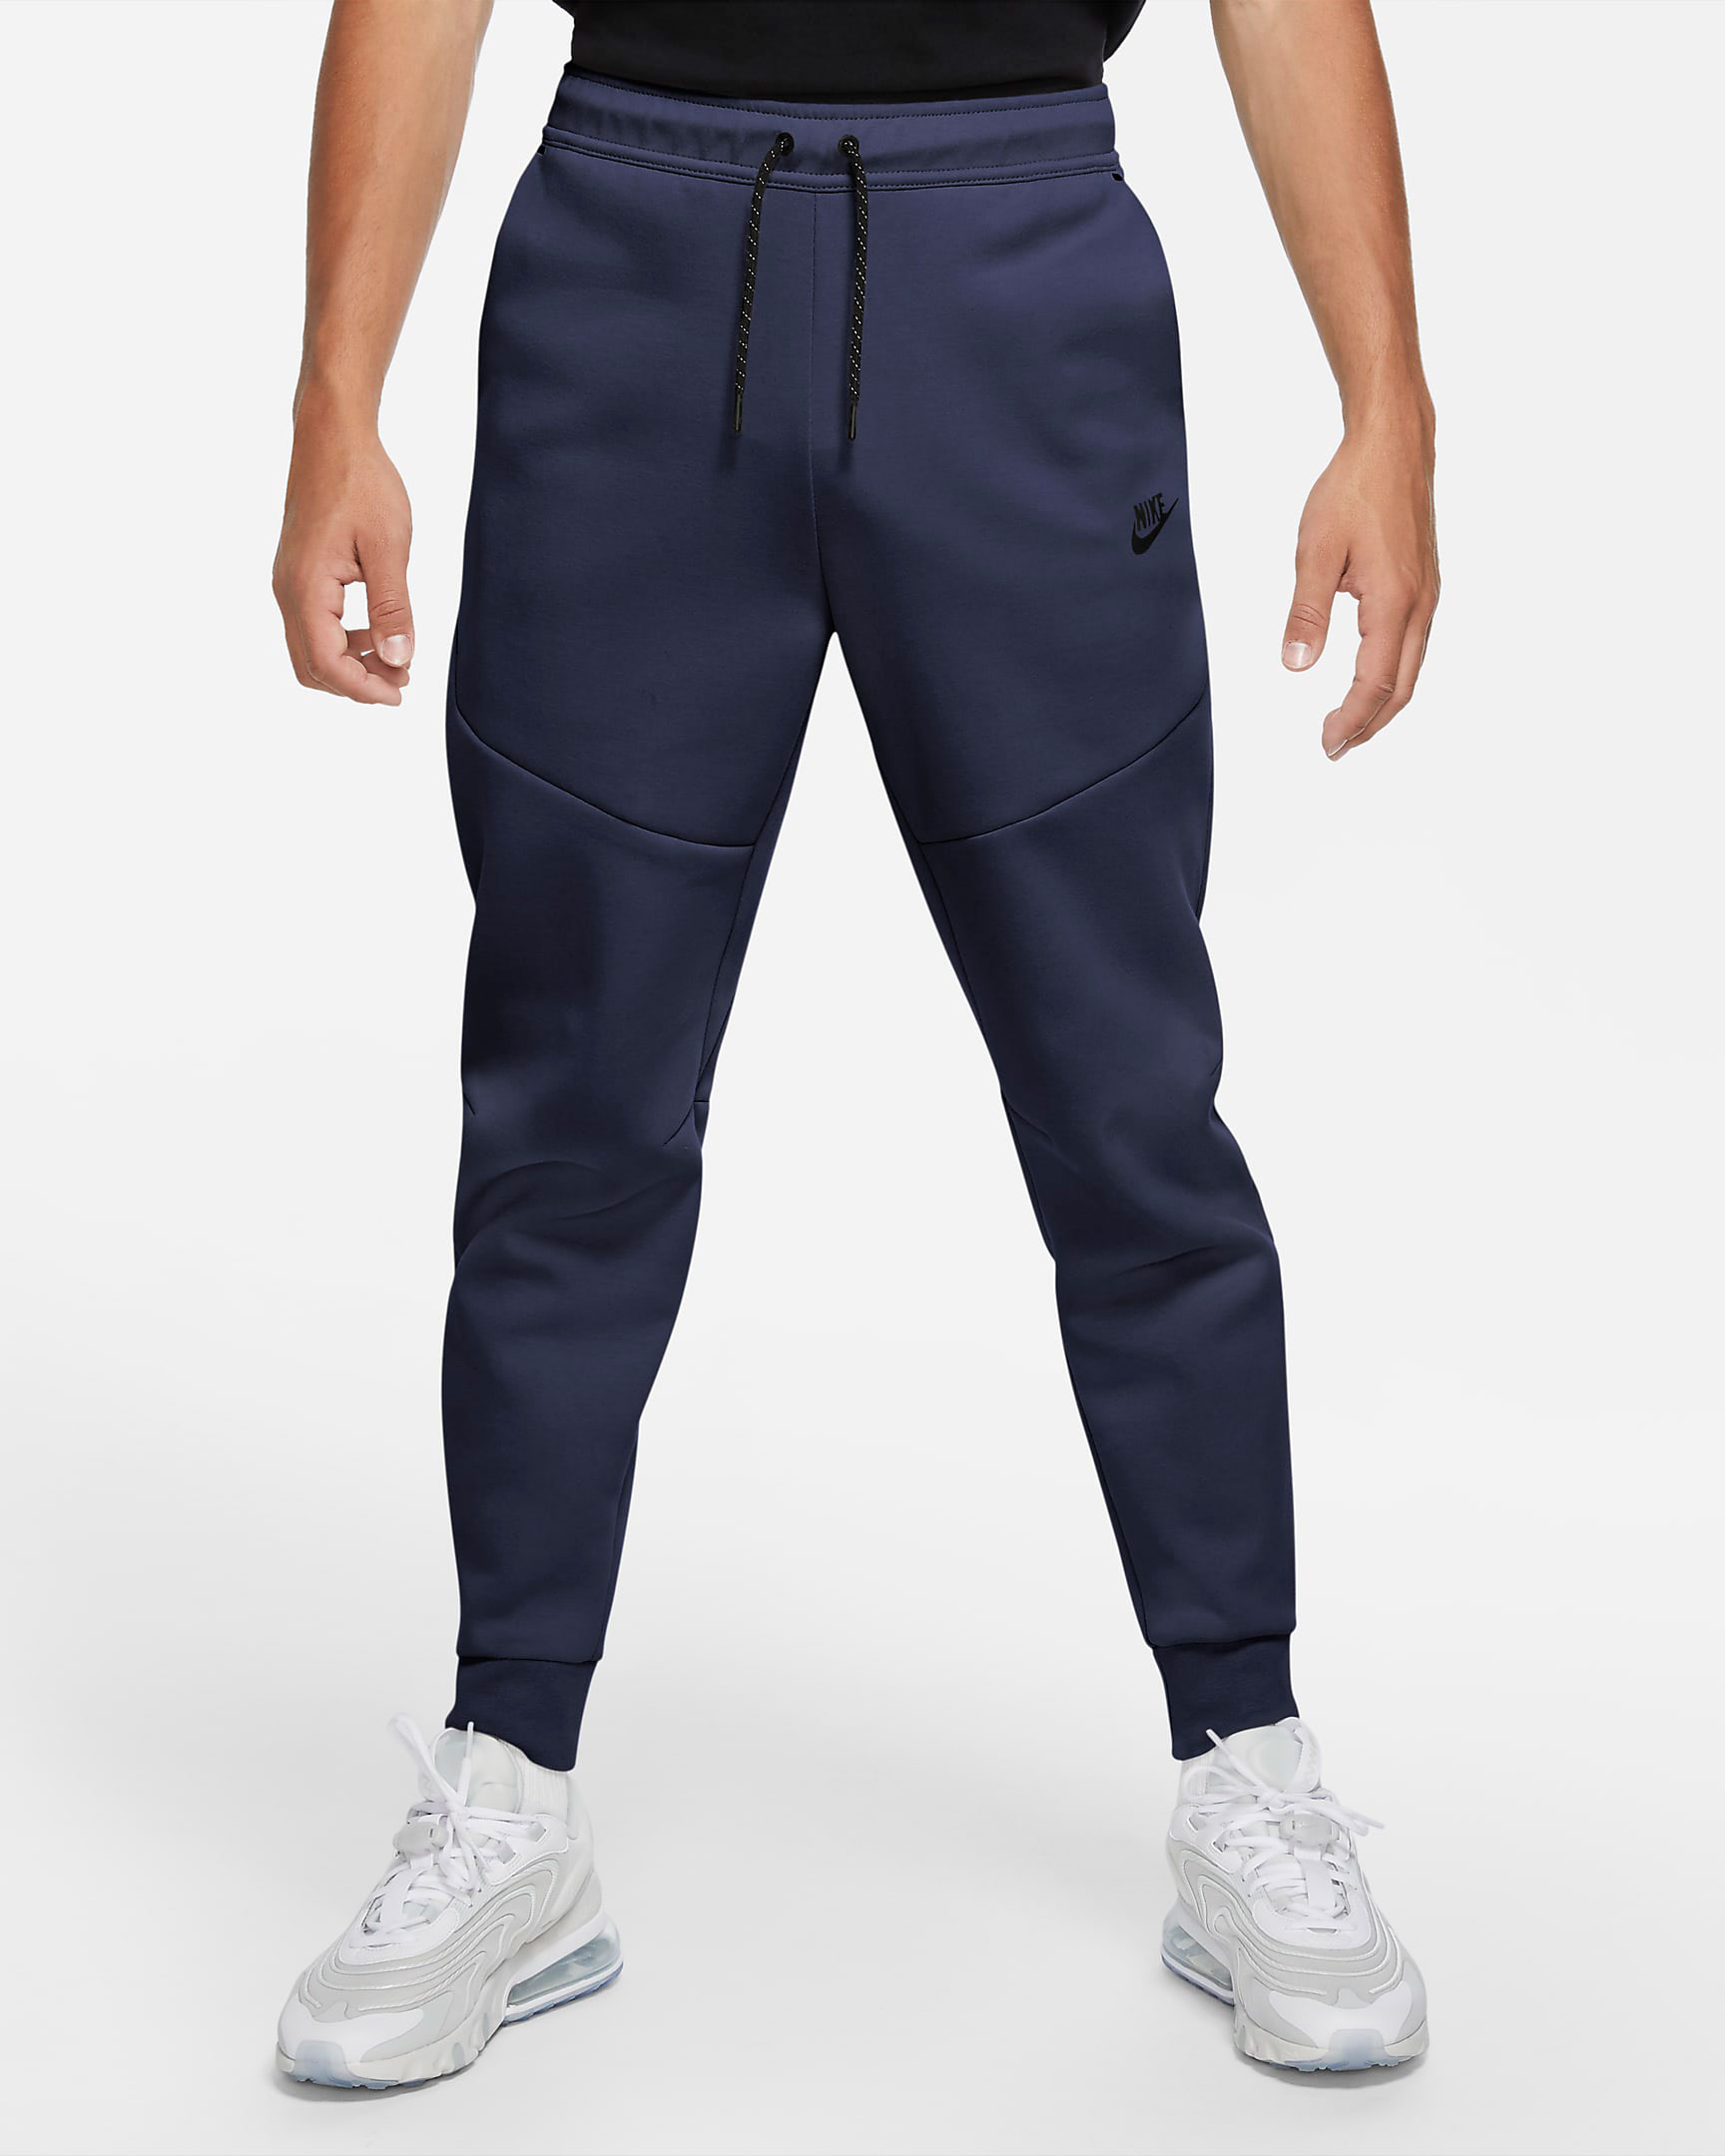 Jordan 1 High Midnight Navy Clothing Match | SneakerFits.com